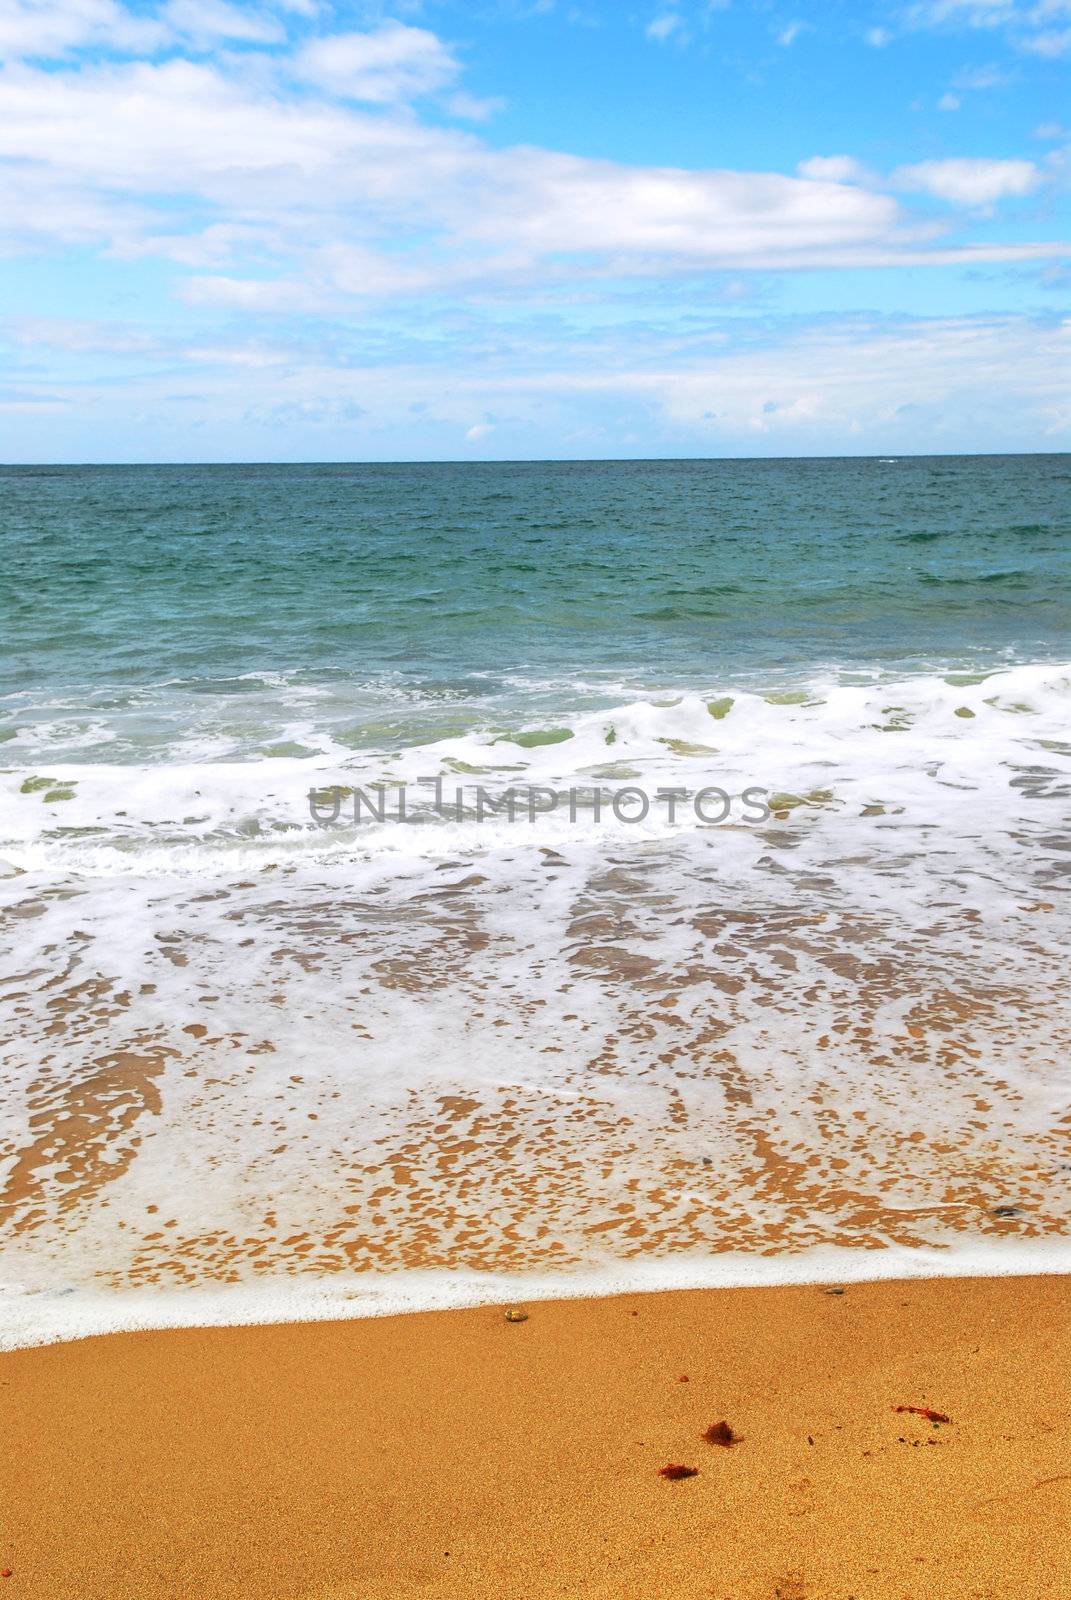 Ocean wave advancing on a yellow sandy beach